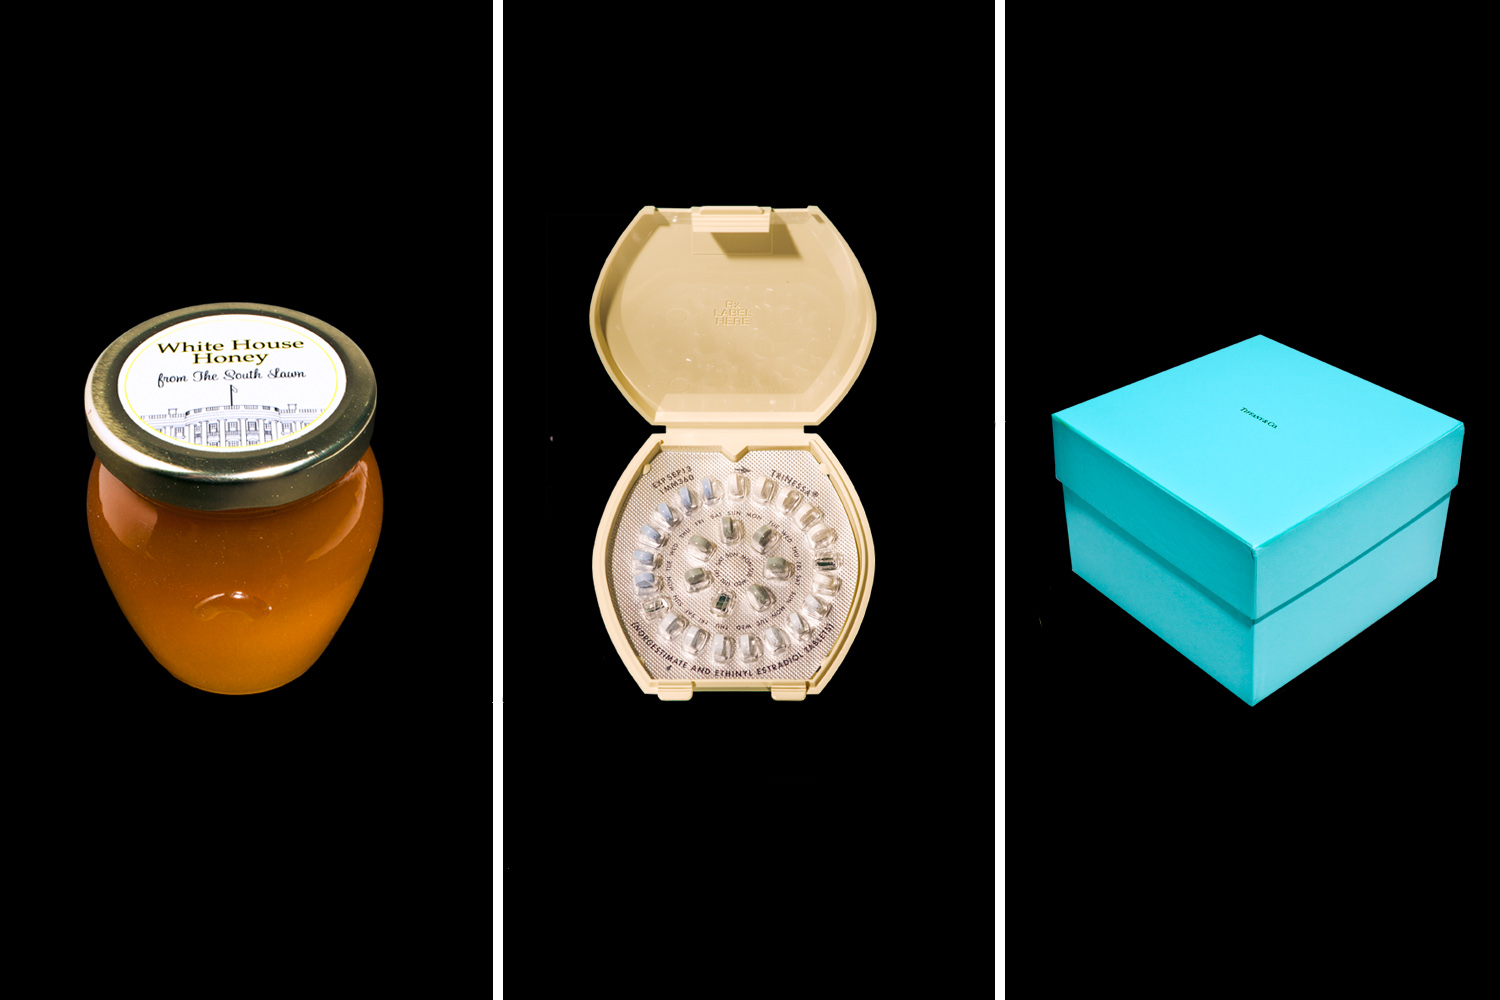 Image: White House Honey, Birth Control and Tiffany Box